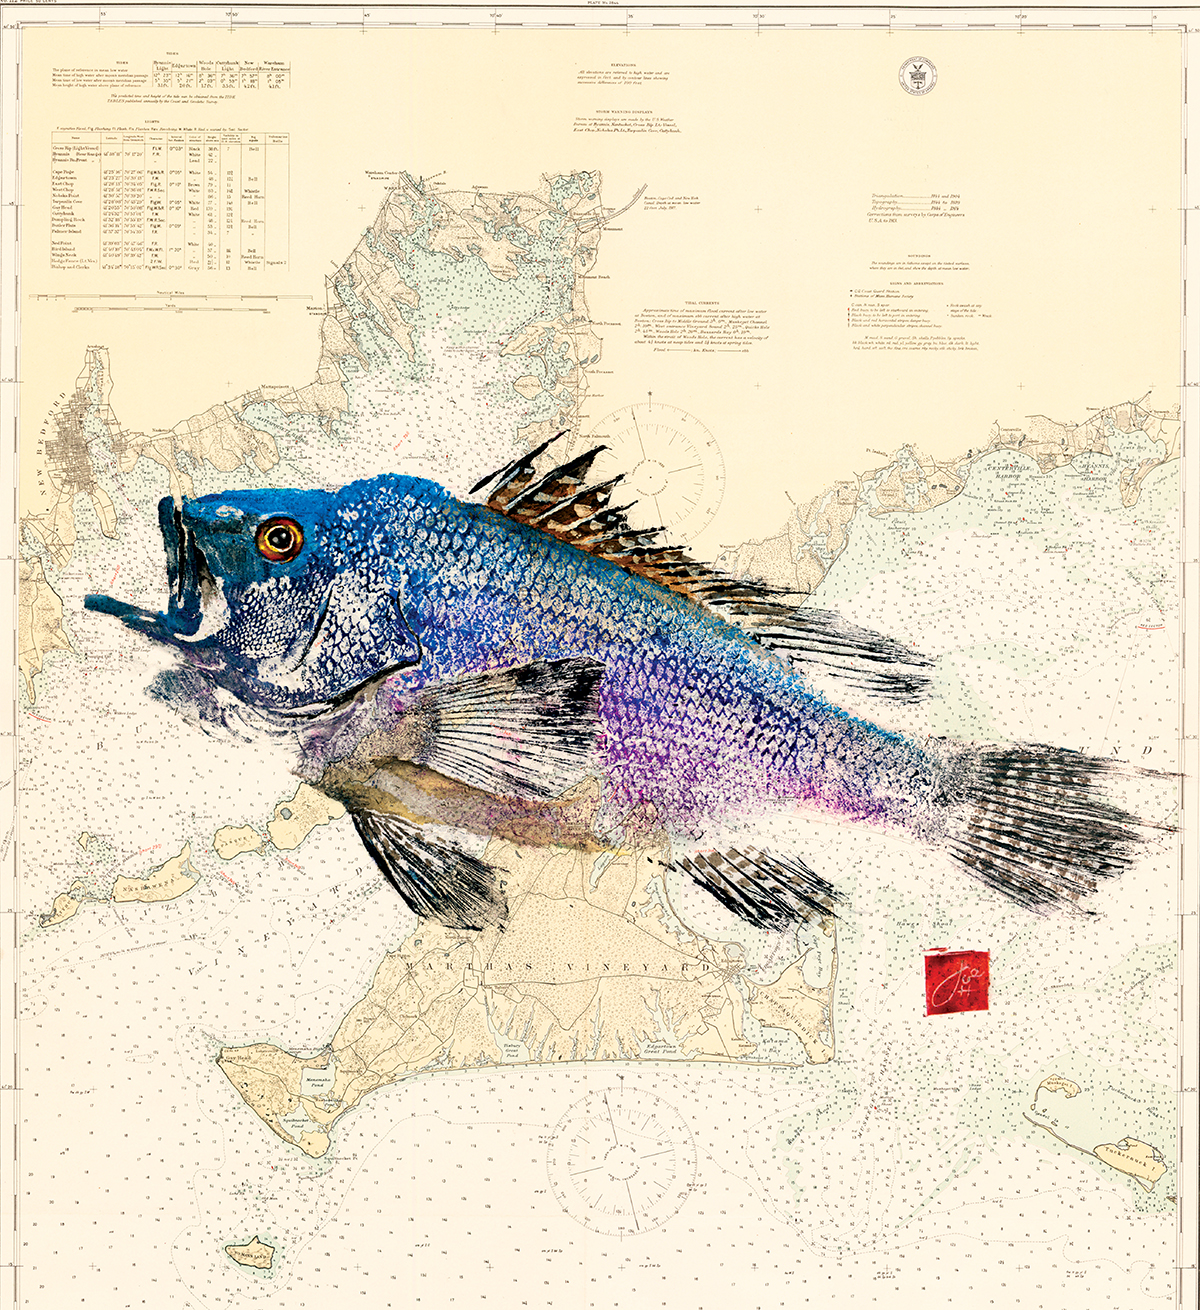 Fish Story: The Origin of Gyotaku, the Japanese Art of Fish Printing